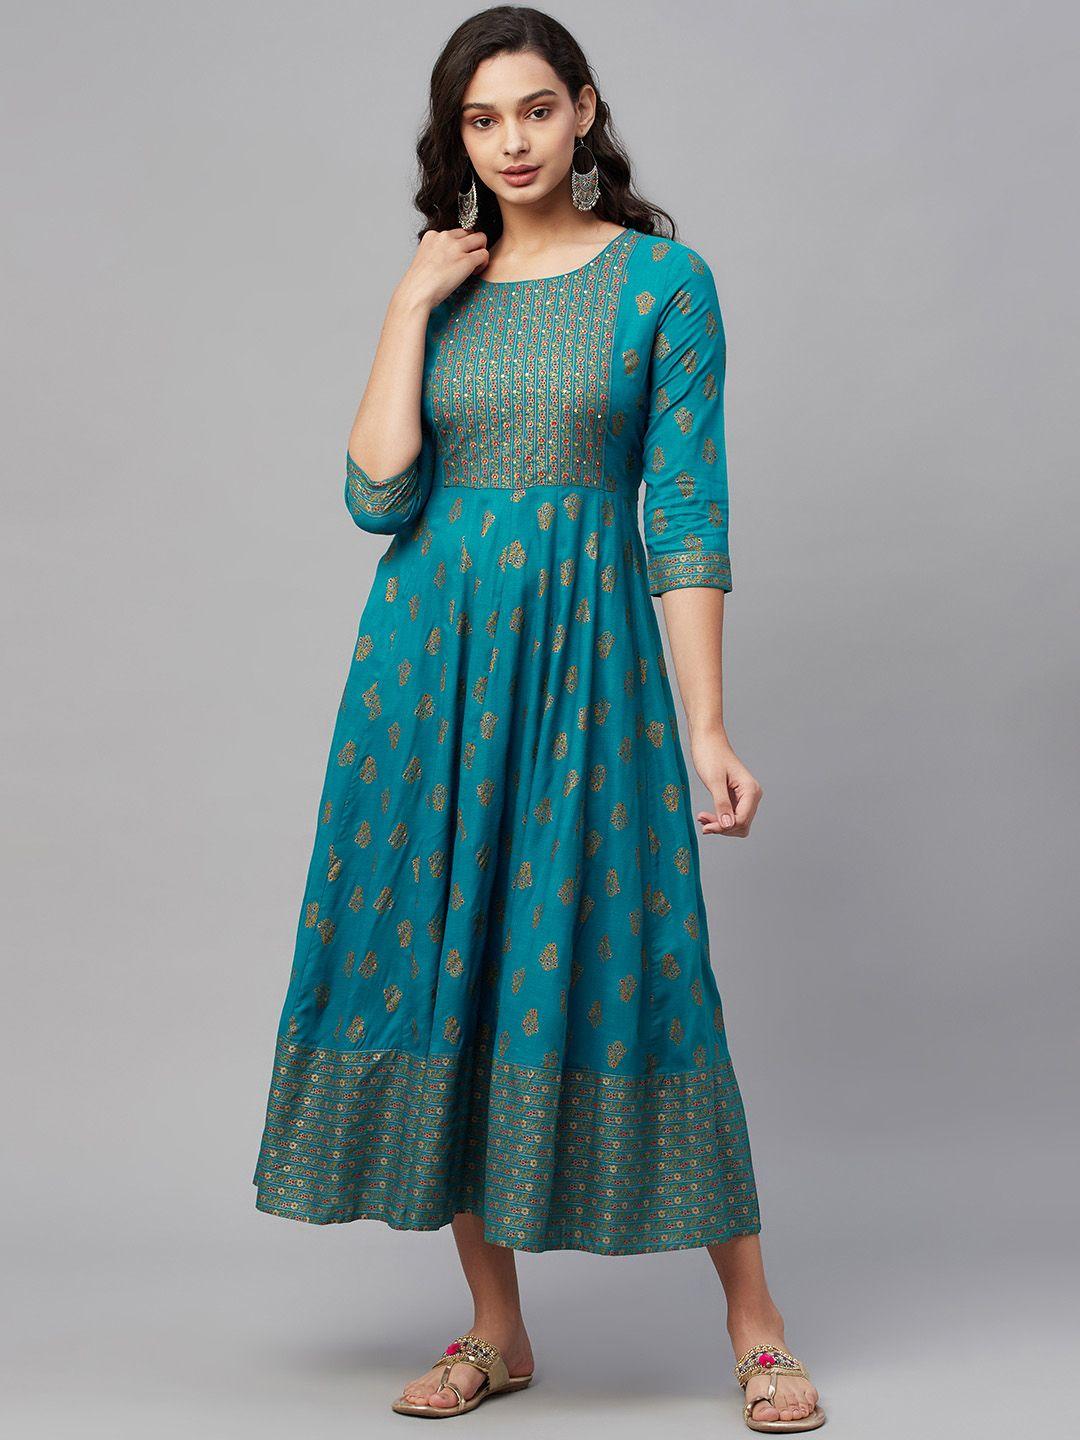 amiras indian ethnic wear teal blue & golden ethnic motifs ethnic midi dress